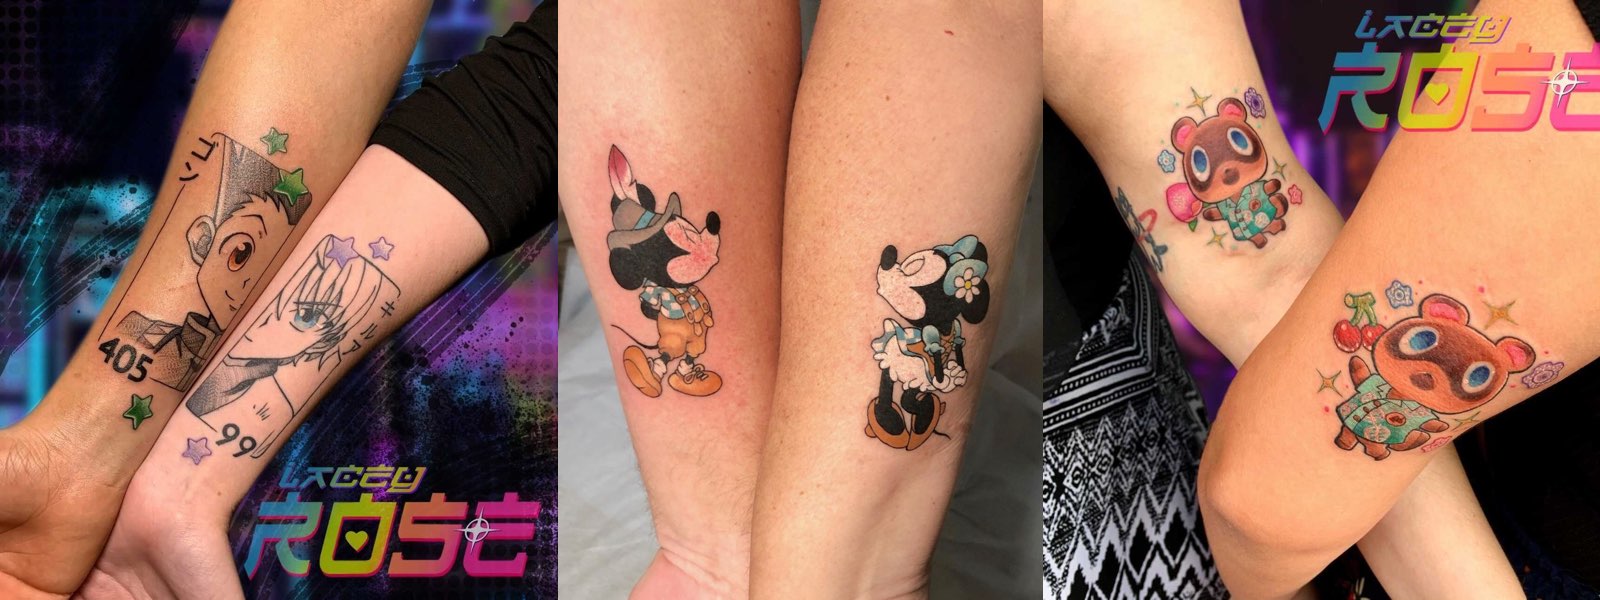 low-key cute leg anime couple tattoo pattern